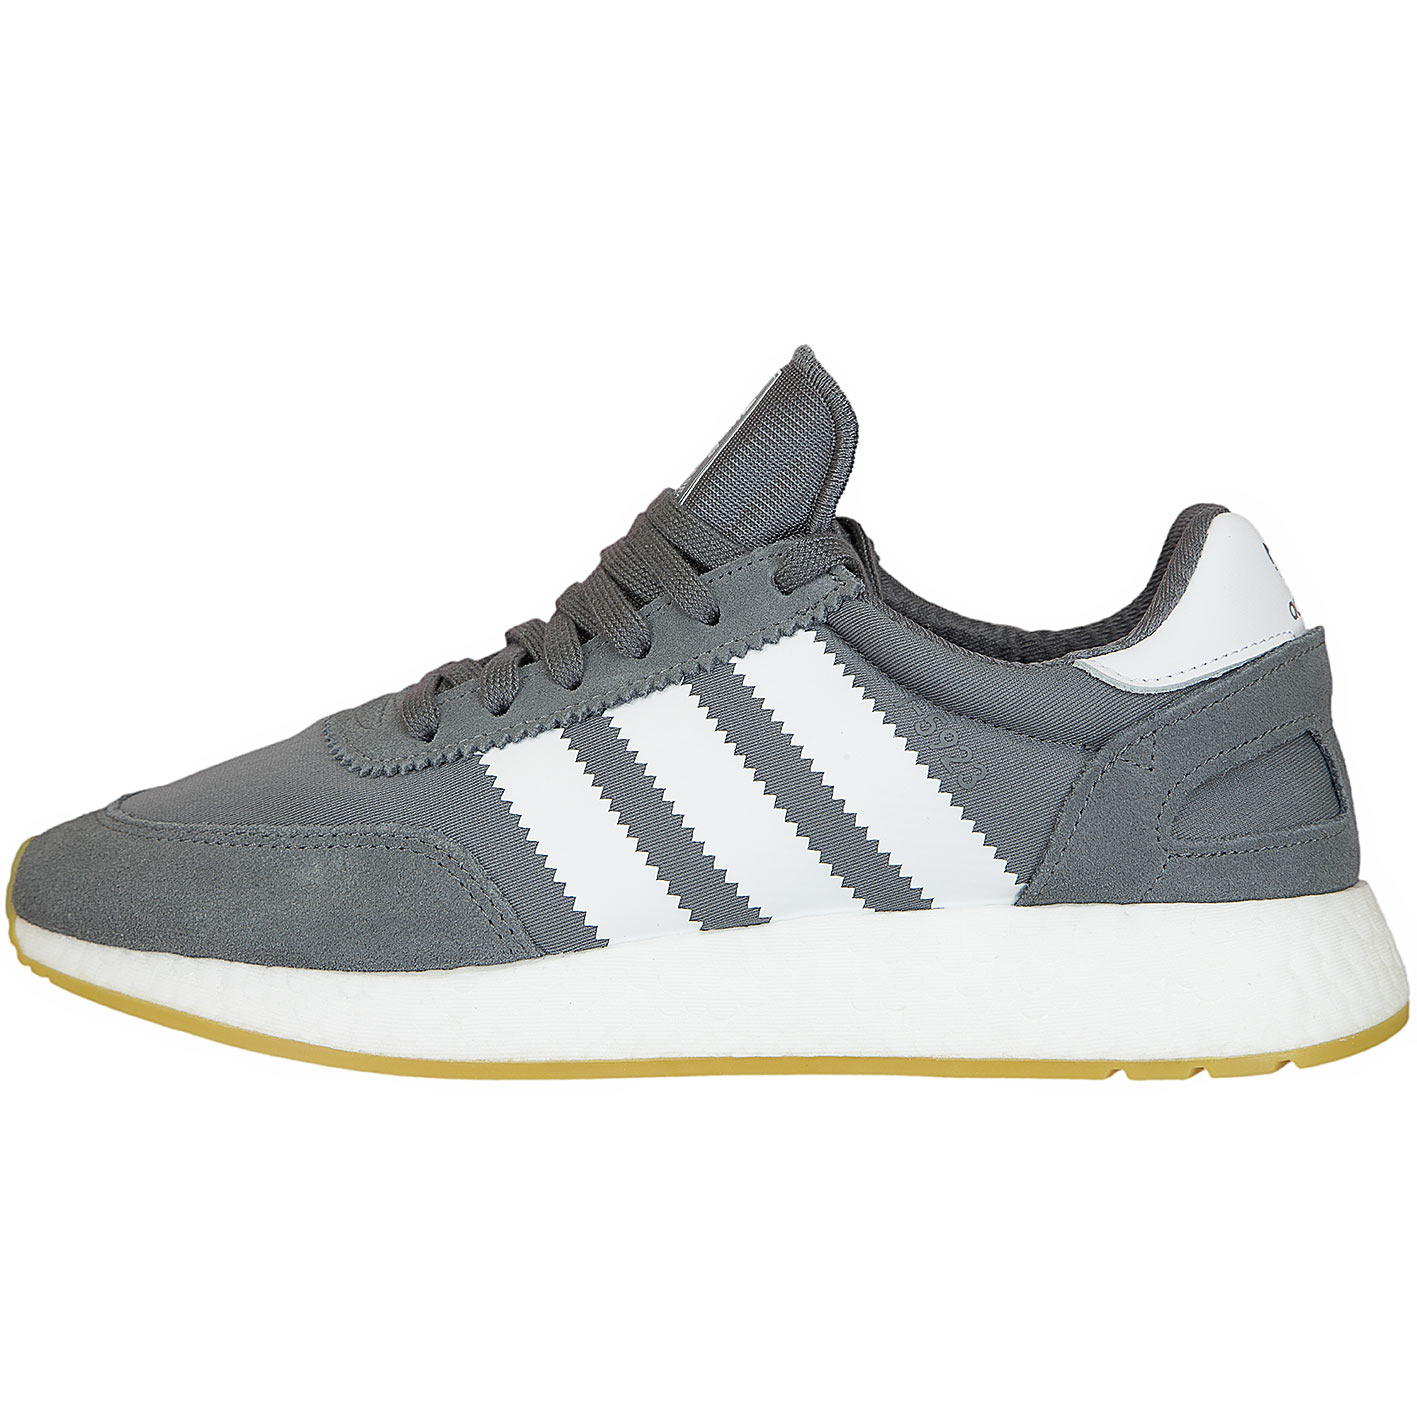 ☆ Adidas Originals Sneaker I-5923 grau - hier bestellen!